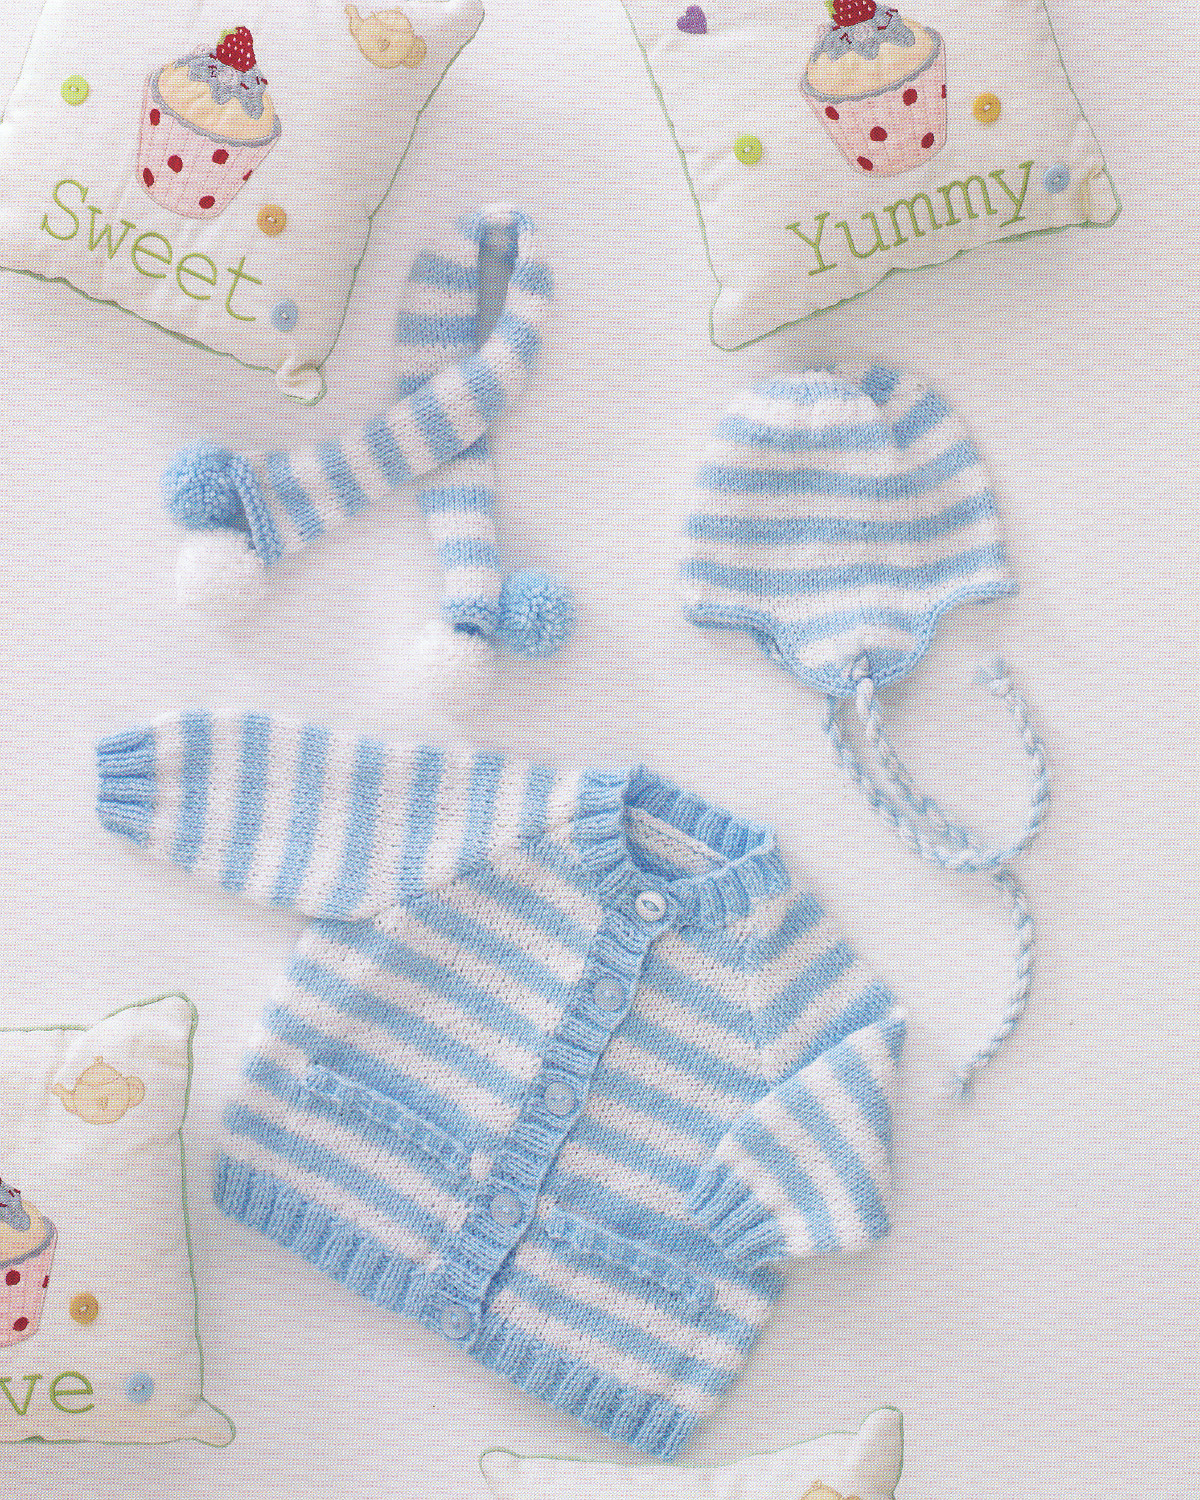 Double Knitting Patterns For Babies Free Details About Double Knitting Dk Pattern Ba Striped Cardigan Tassel Helmet Hat Ukhka 113